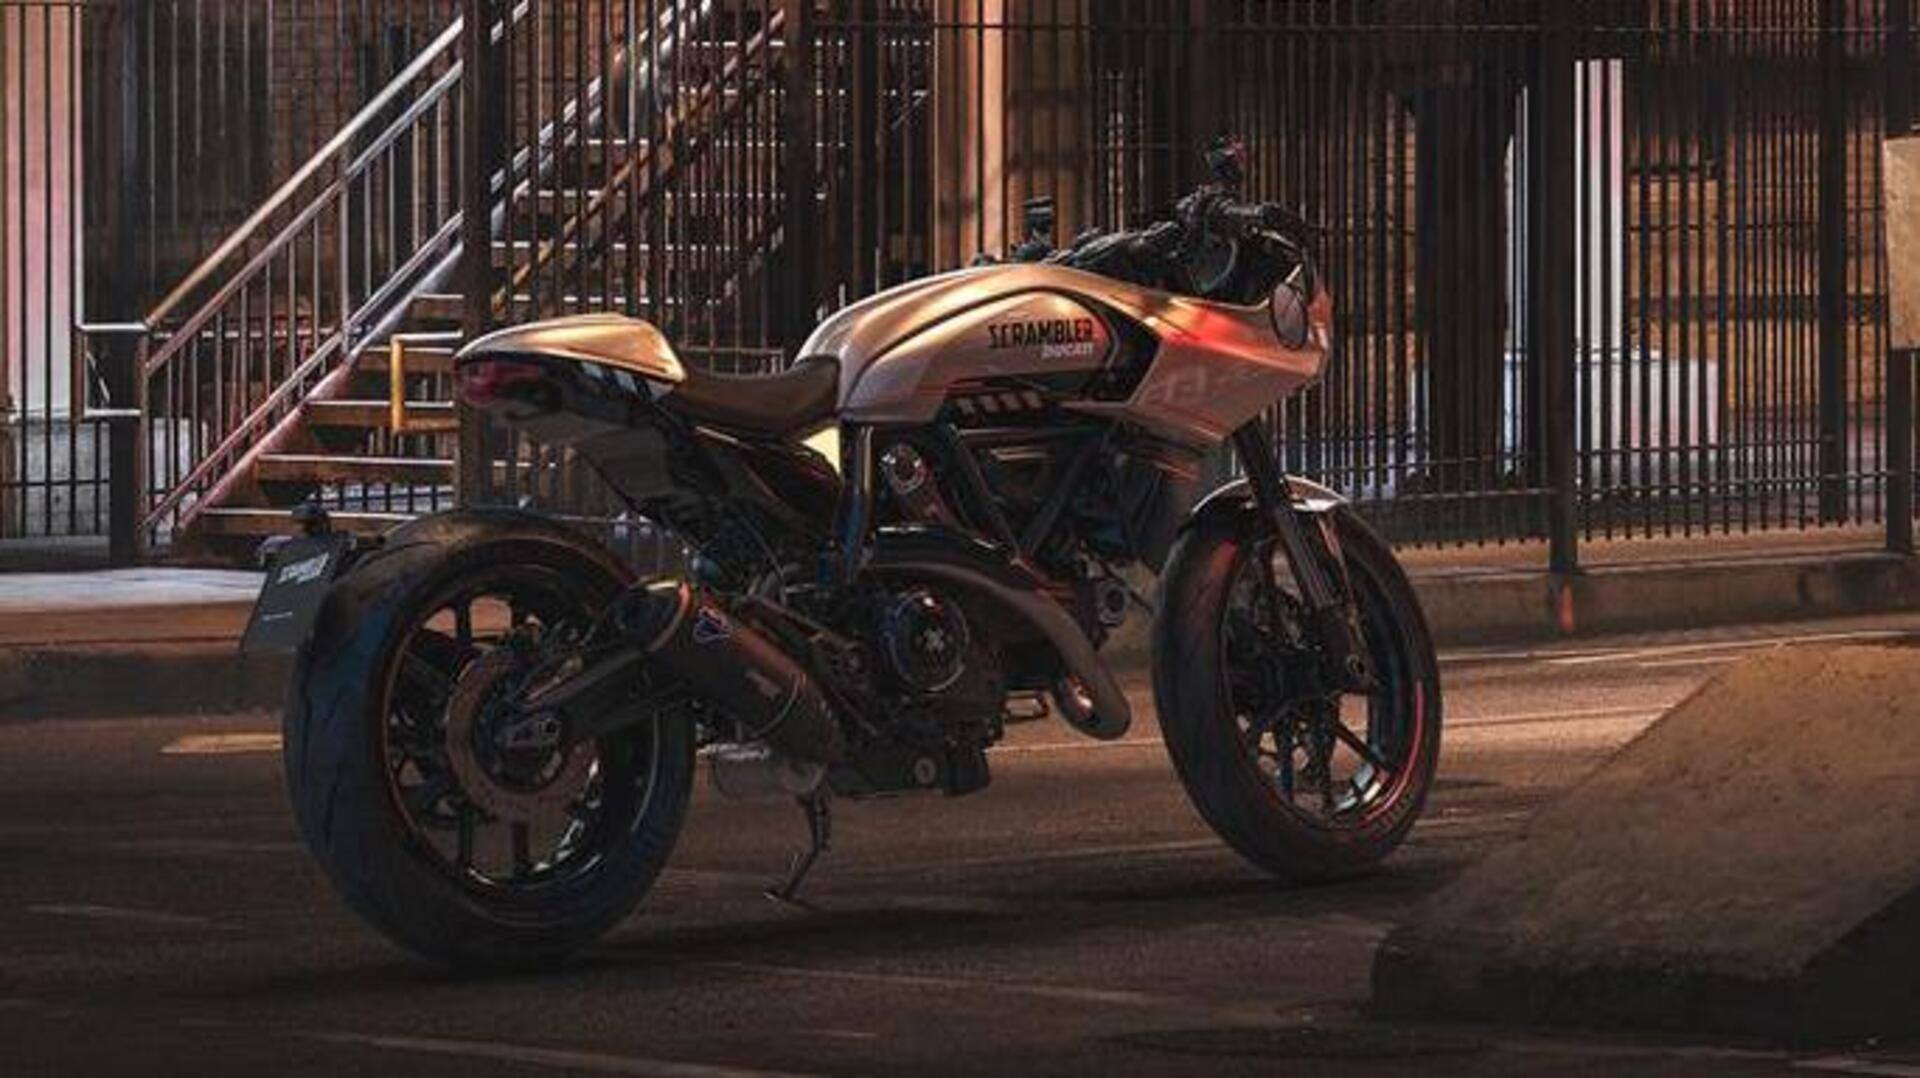 Ducati reveals new Scrambler concept bikes at London Bike Show